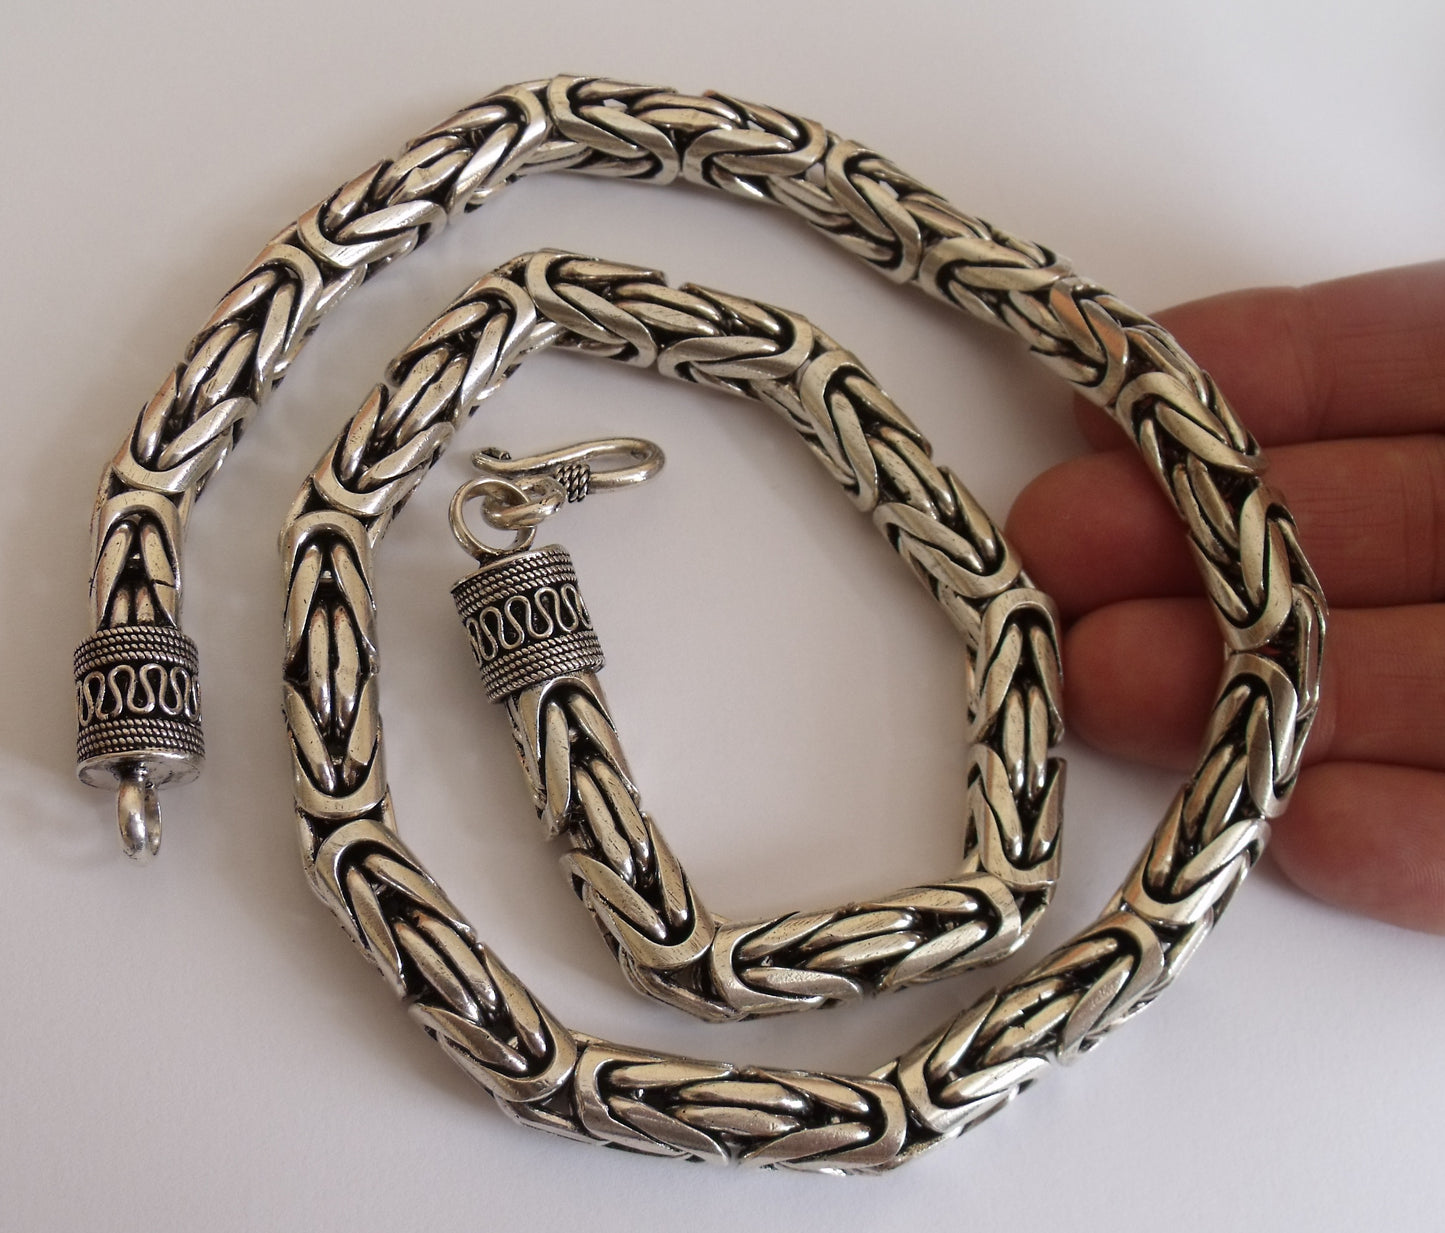 Byzantine Bali Necklace - 10mm wide